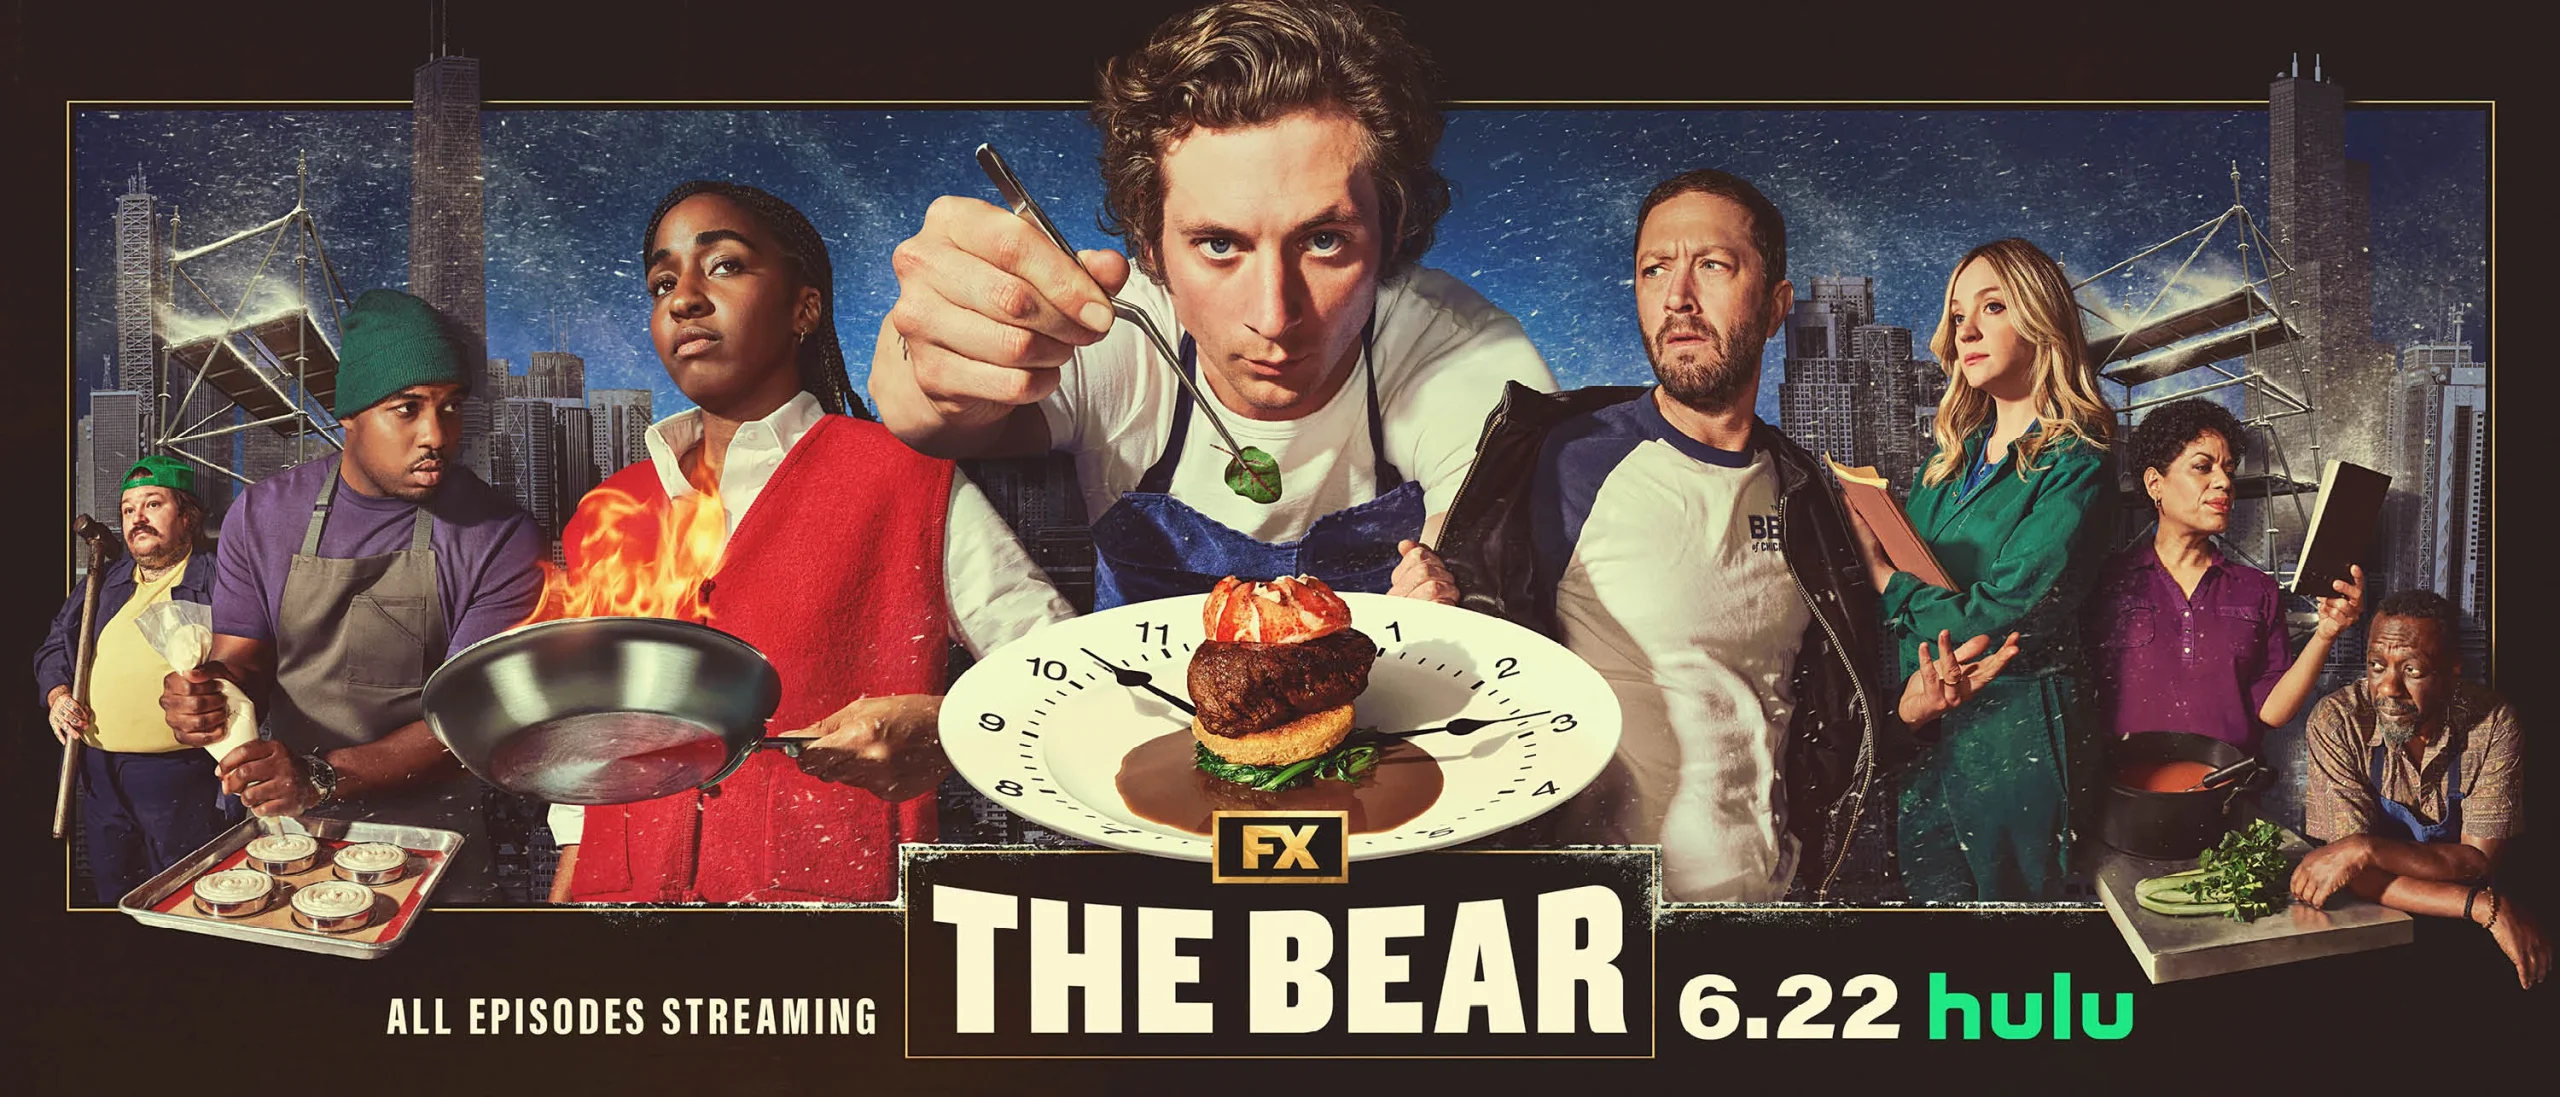 The Bear season 2